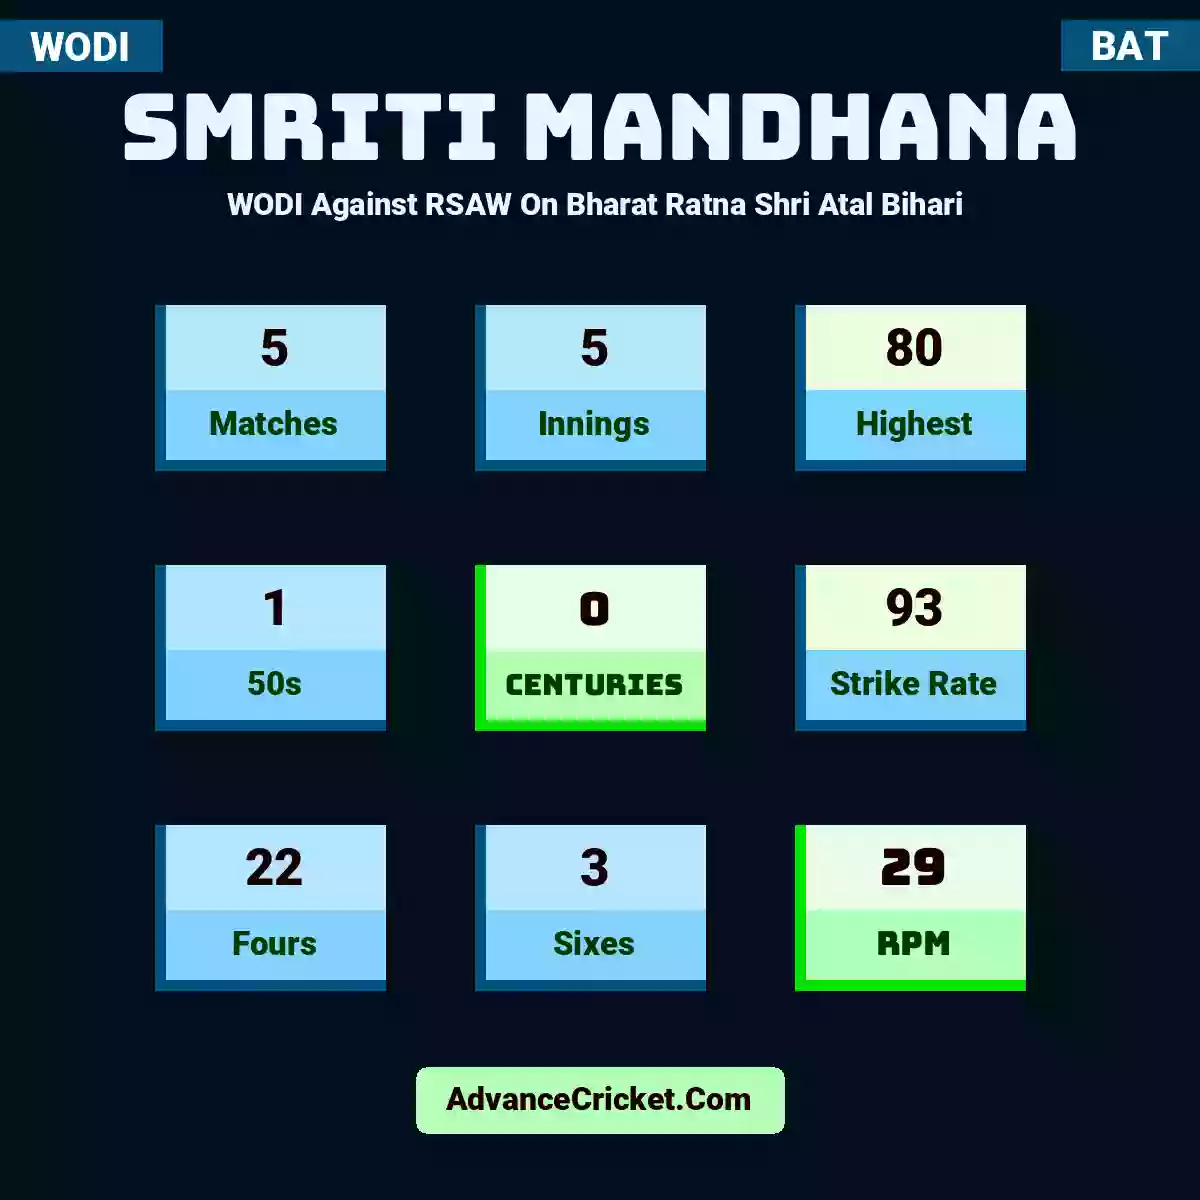 Smriti Mandhana WODI  Against RSAW On Bharat Ratna Shri Atal Bihari , Smriti Mandhana played 5 matches, scored 80 runs as highest, 1 half-centuries, and 0 centuries, with a strike rate of 93. S.Mandhana hit 22 fours and 3 sixes, with an RPM of 29.